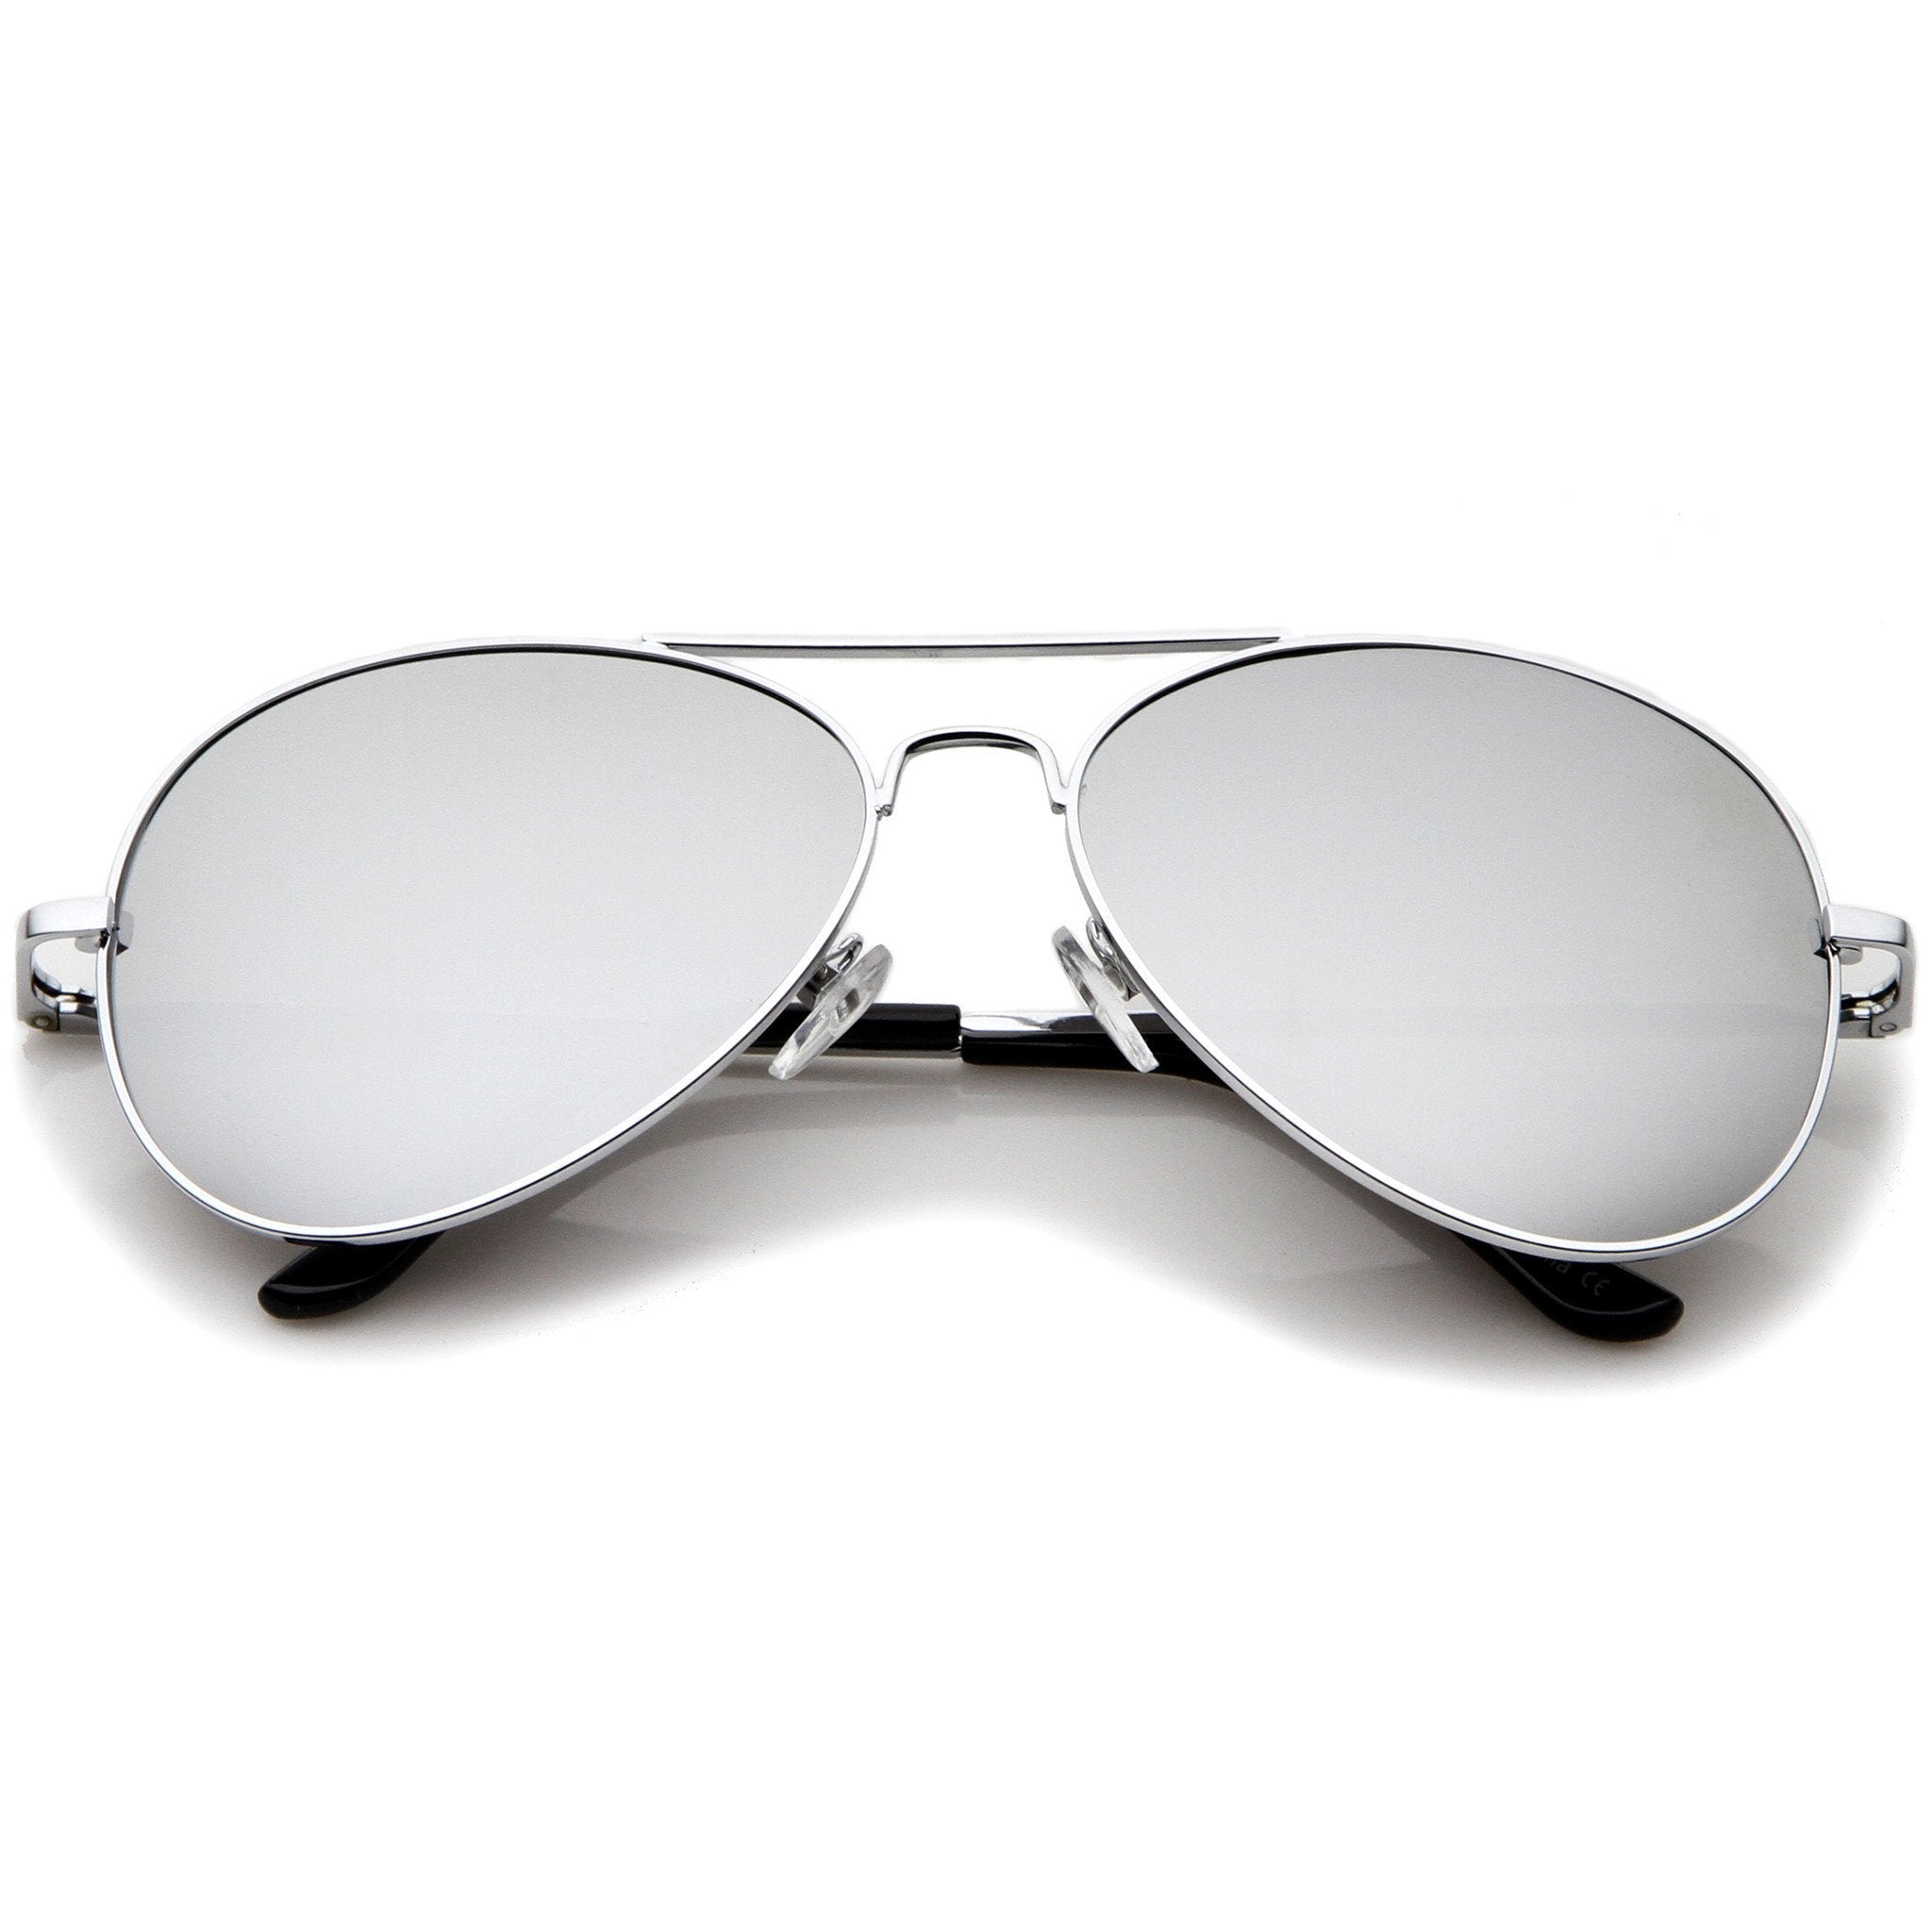  Big Mo's Toys Silver Mirrored Aviator Sunglasses